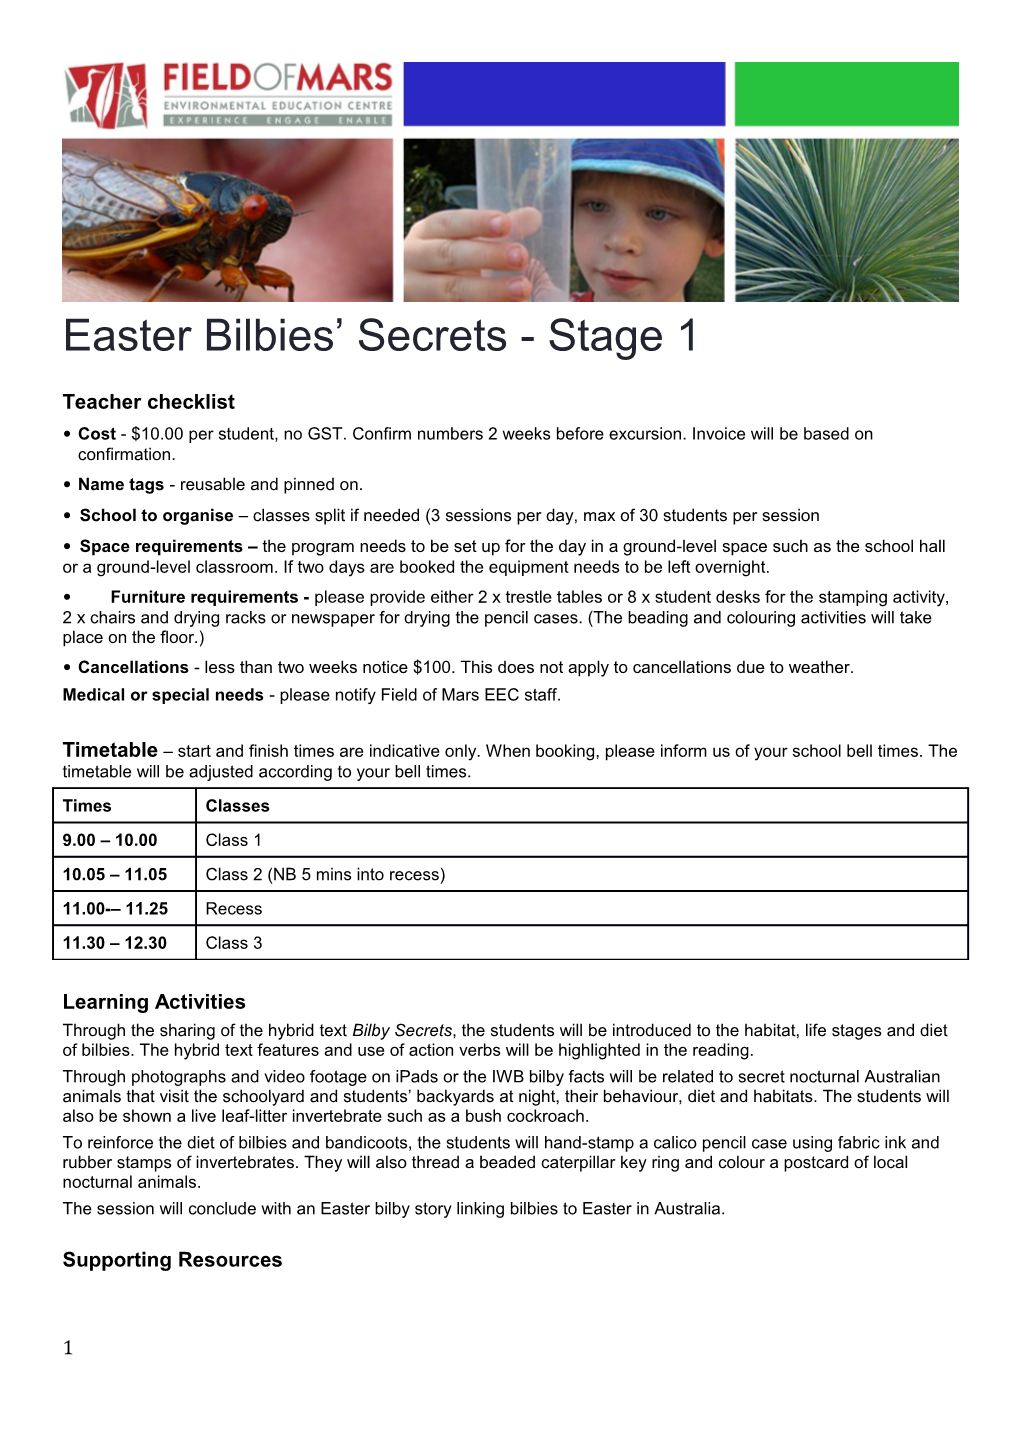 Easter Bilbies Secrets - Stage 1